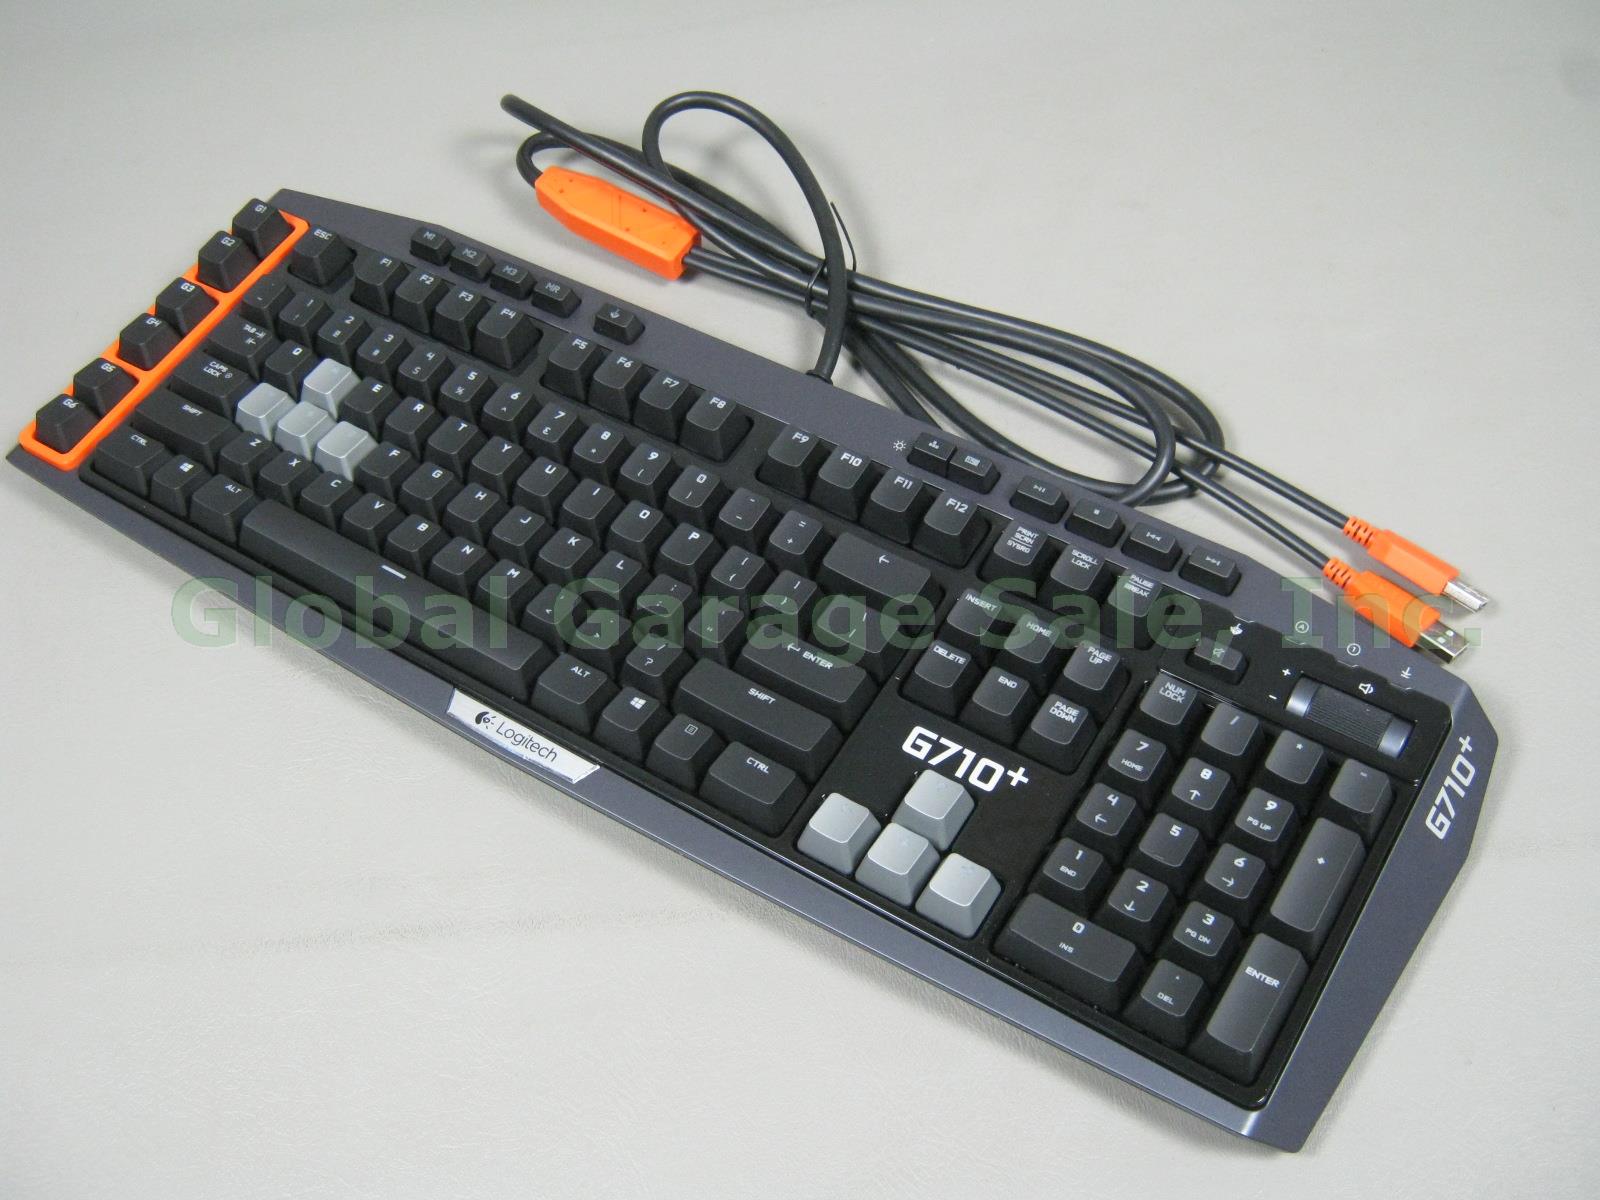 Logitech G710+ Mechanical Gaming Keyboard 124 Tactile High Speed Keys Switches + 1